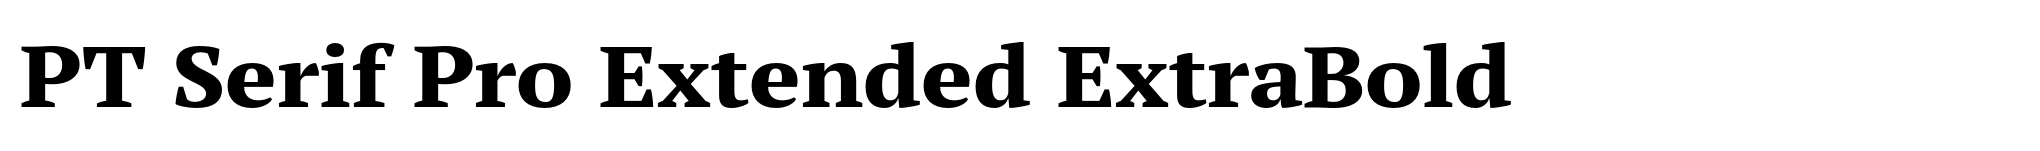 PT Serif Pro Extended ExtraBold image